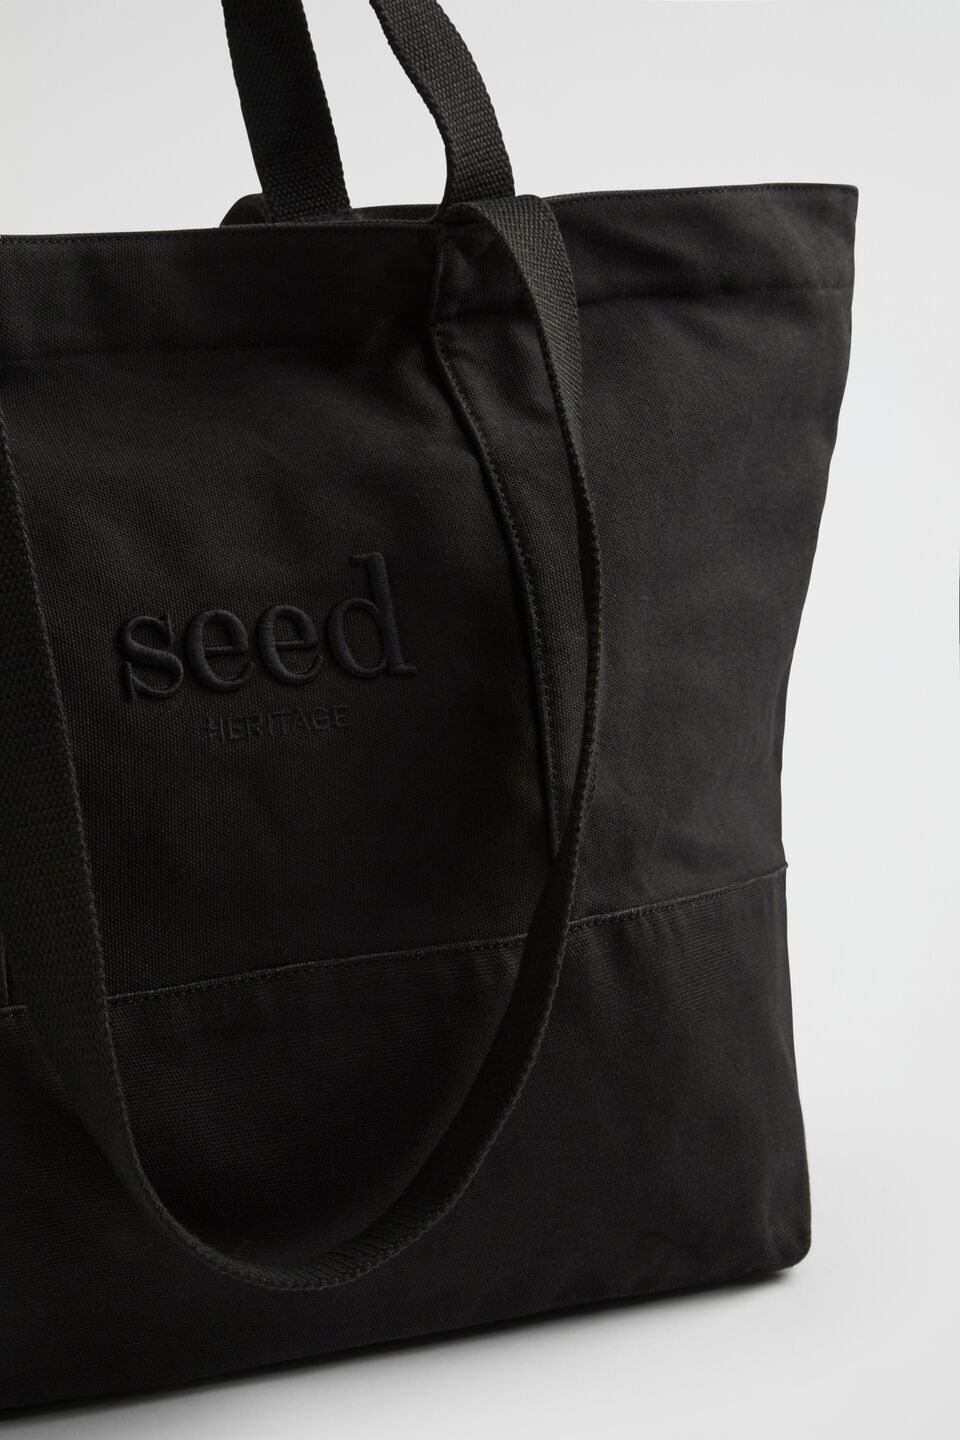 Seed Overnight Bag  True Black